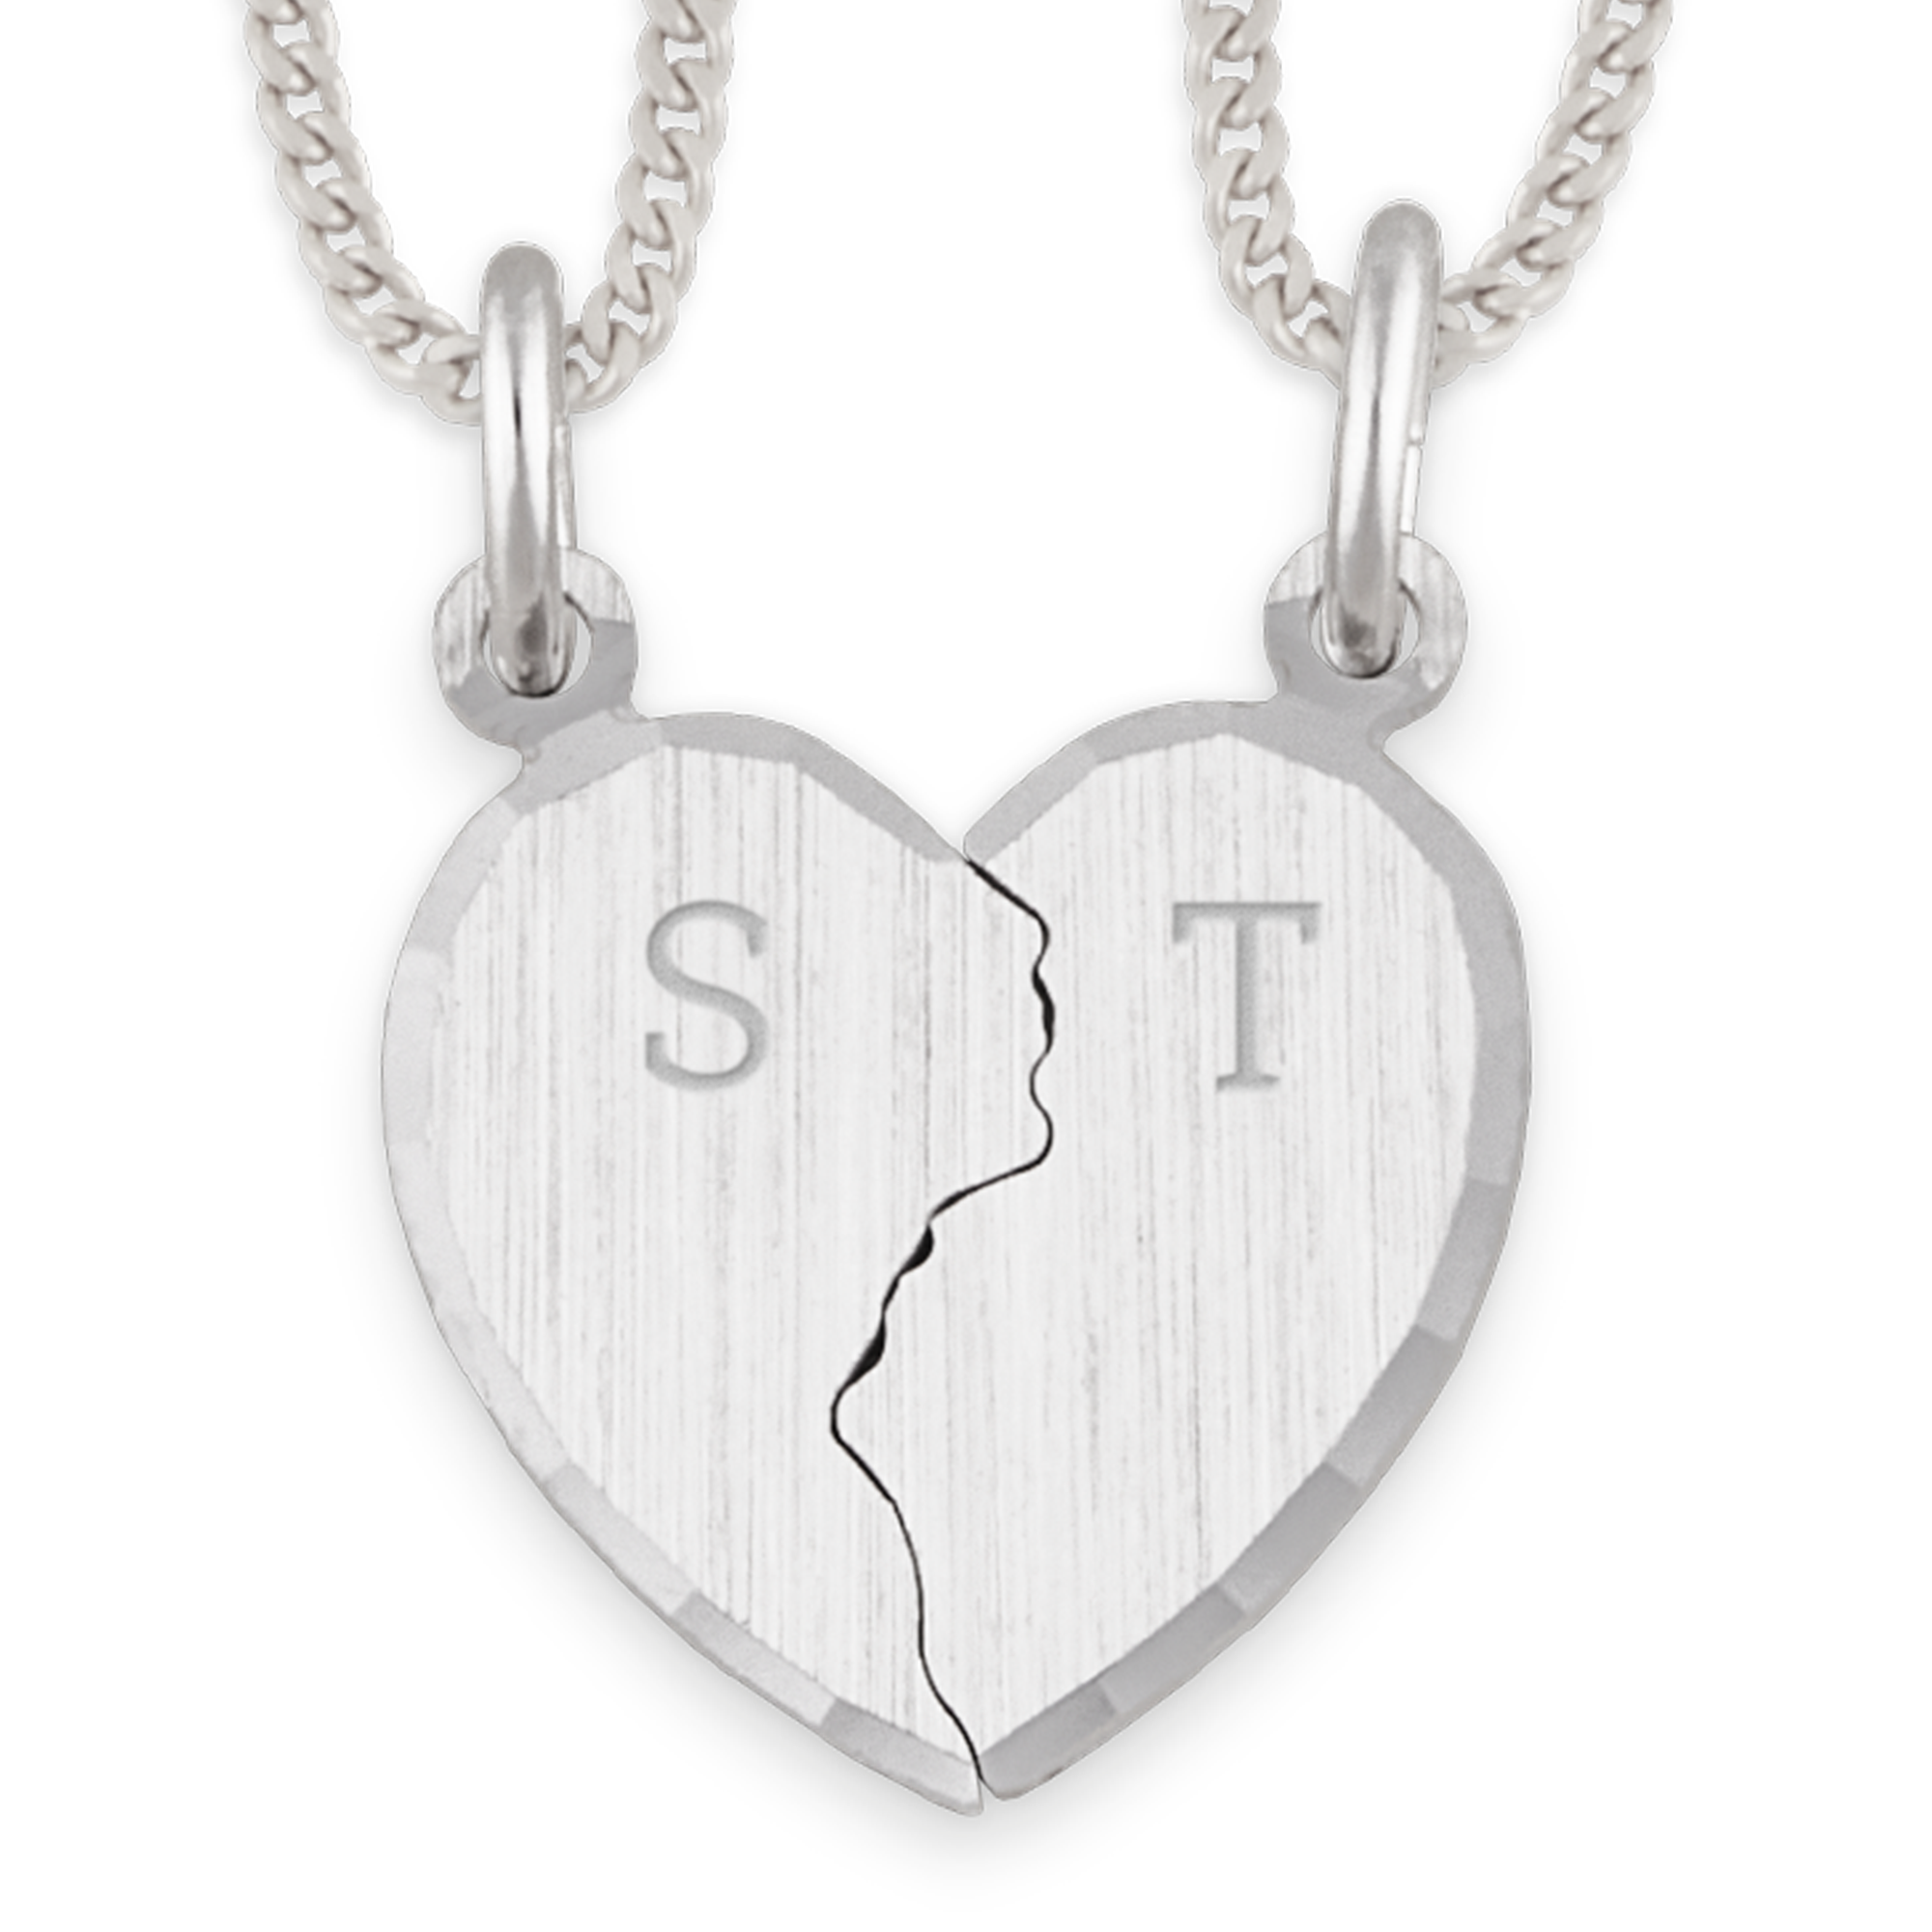 Silver pendant - Broken hearts - Initial